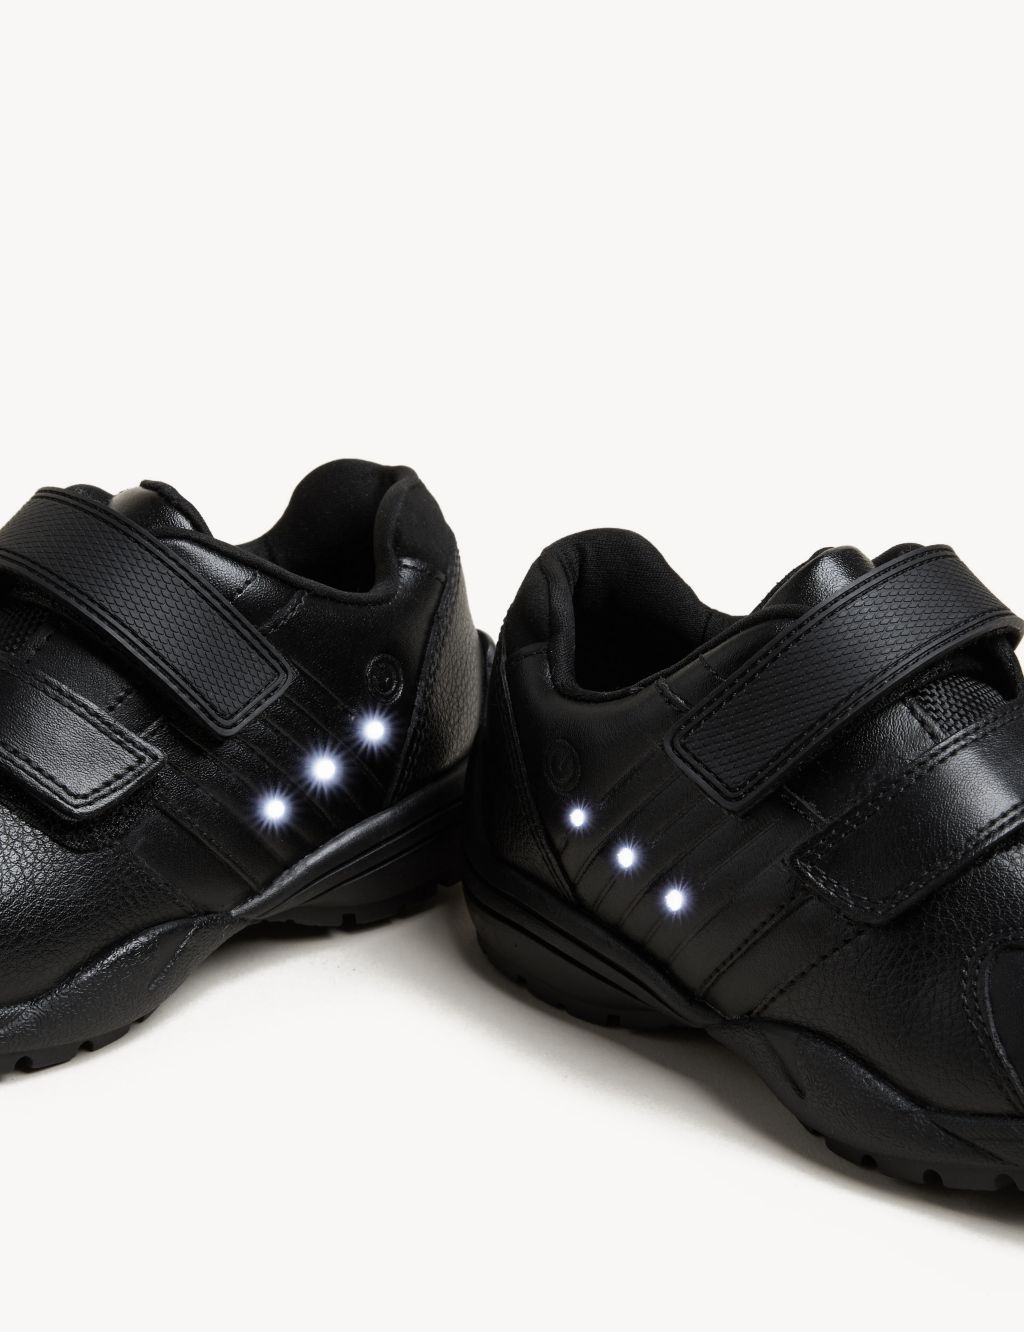 Kid’s Freshfeet™ Light-Up School Shoes (8 Small - 2 Large) image 2